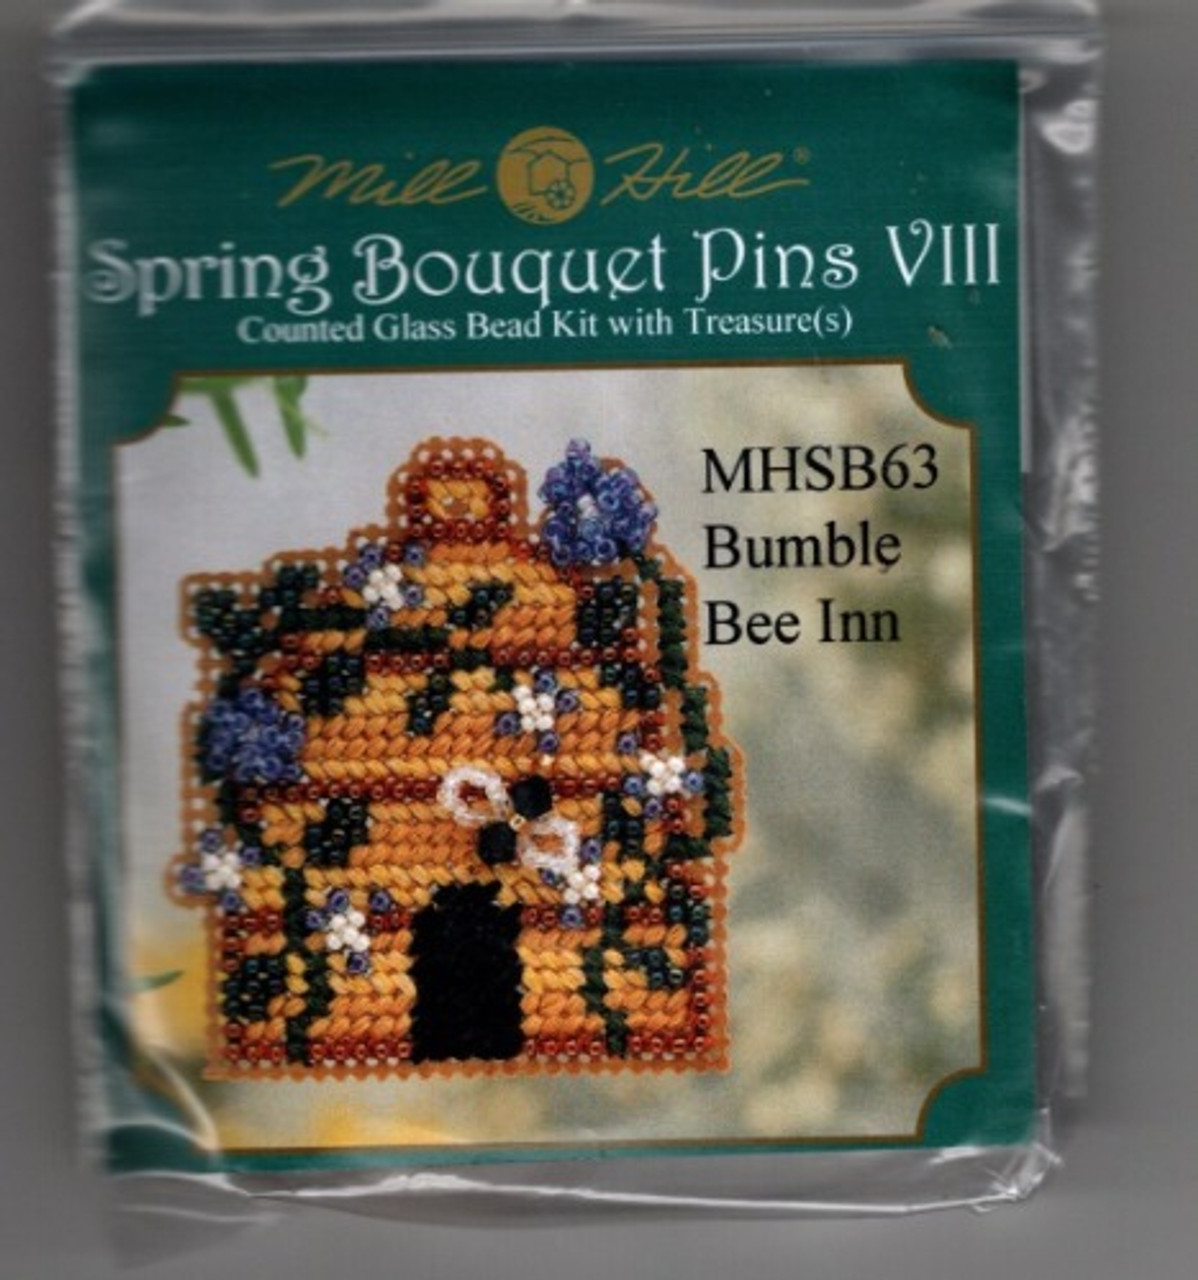 Mill Hill BUMBLE BEE INN Spring Bouquet Pins VIII